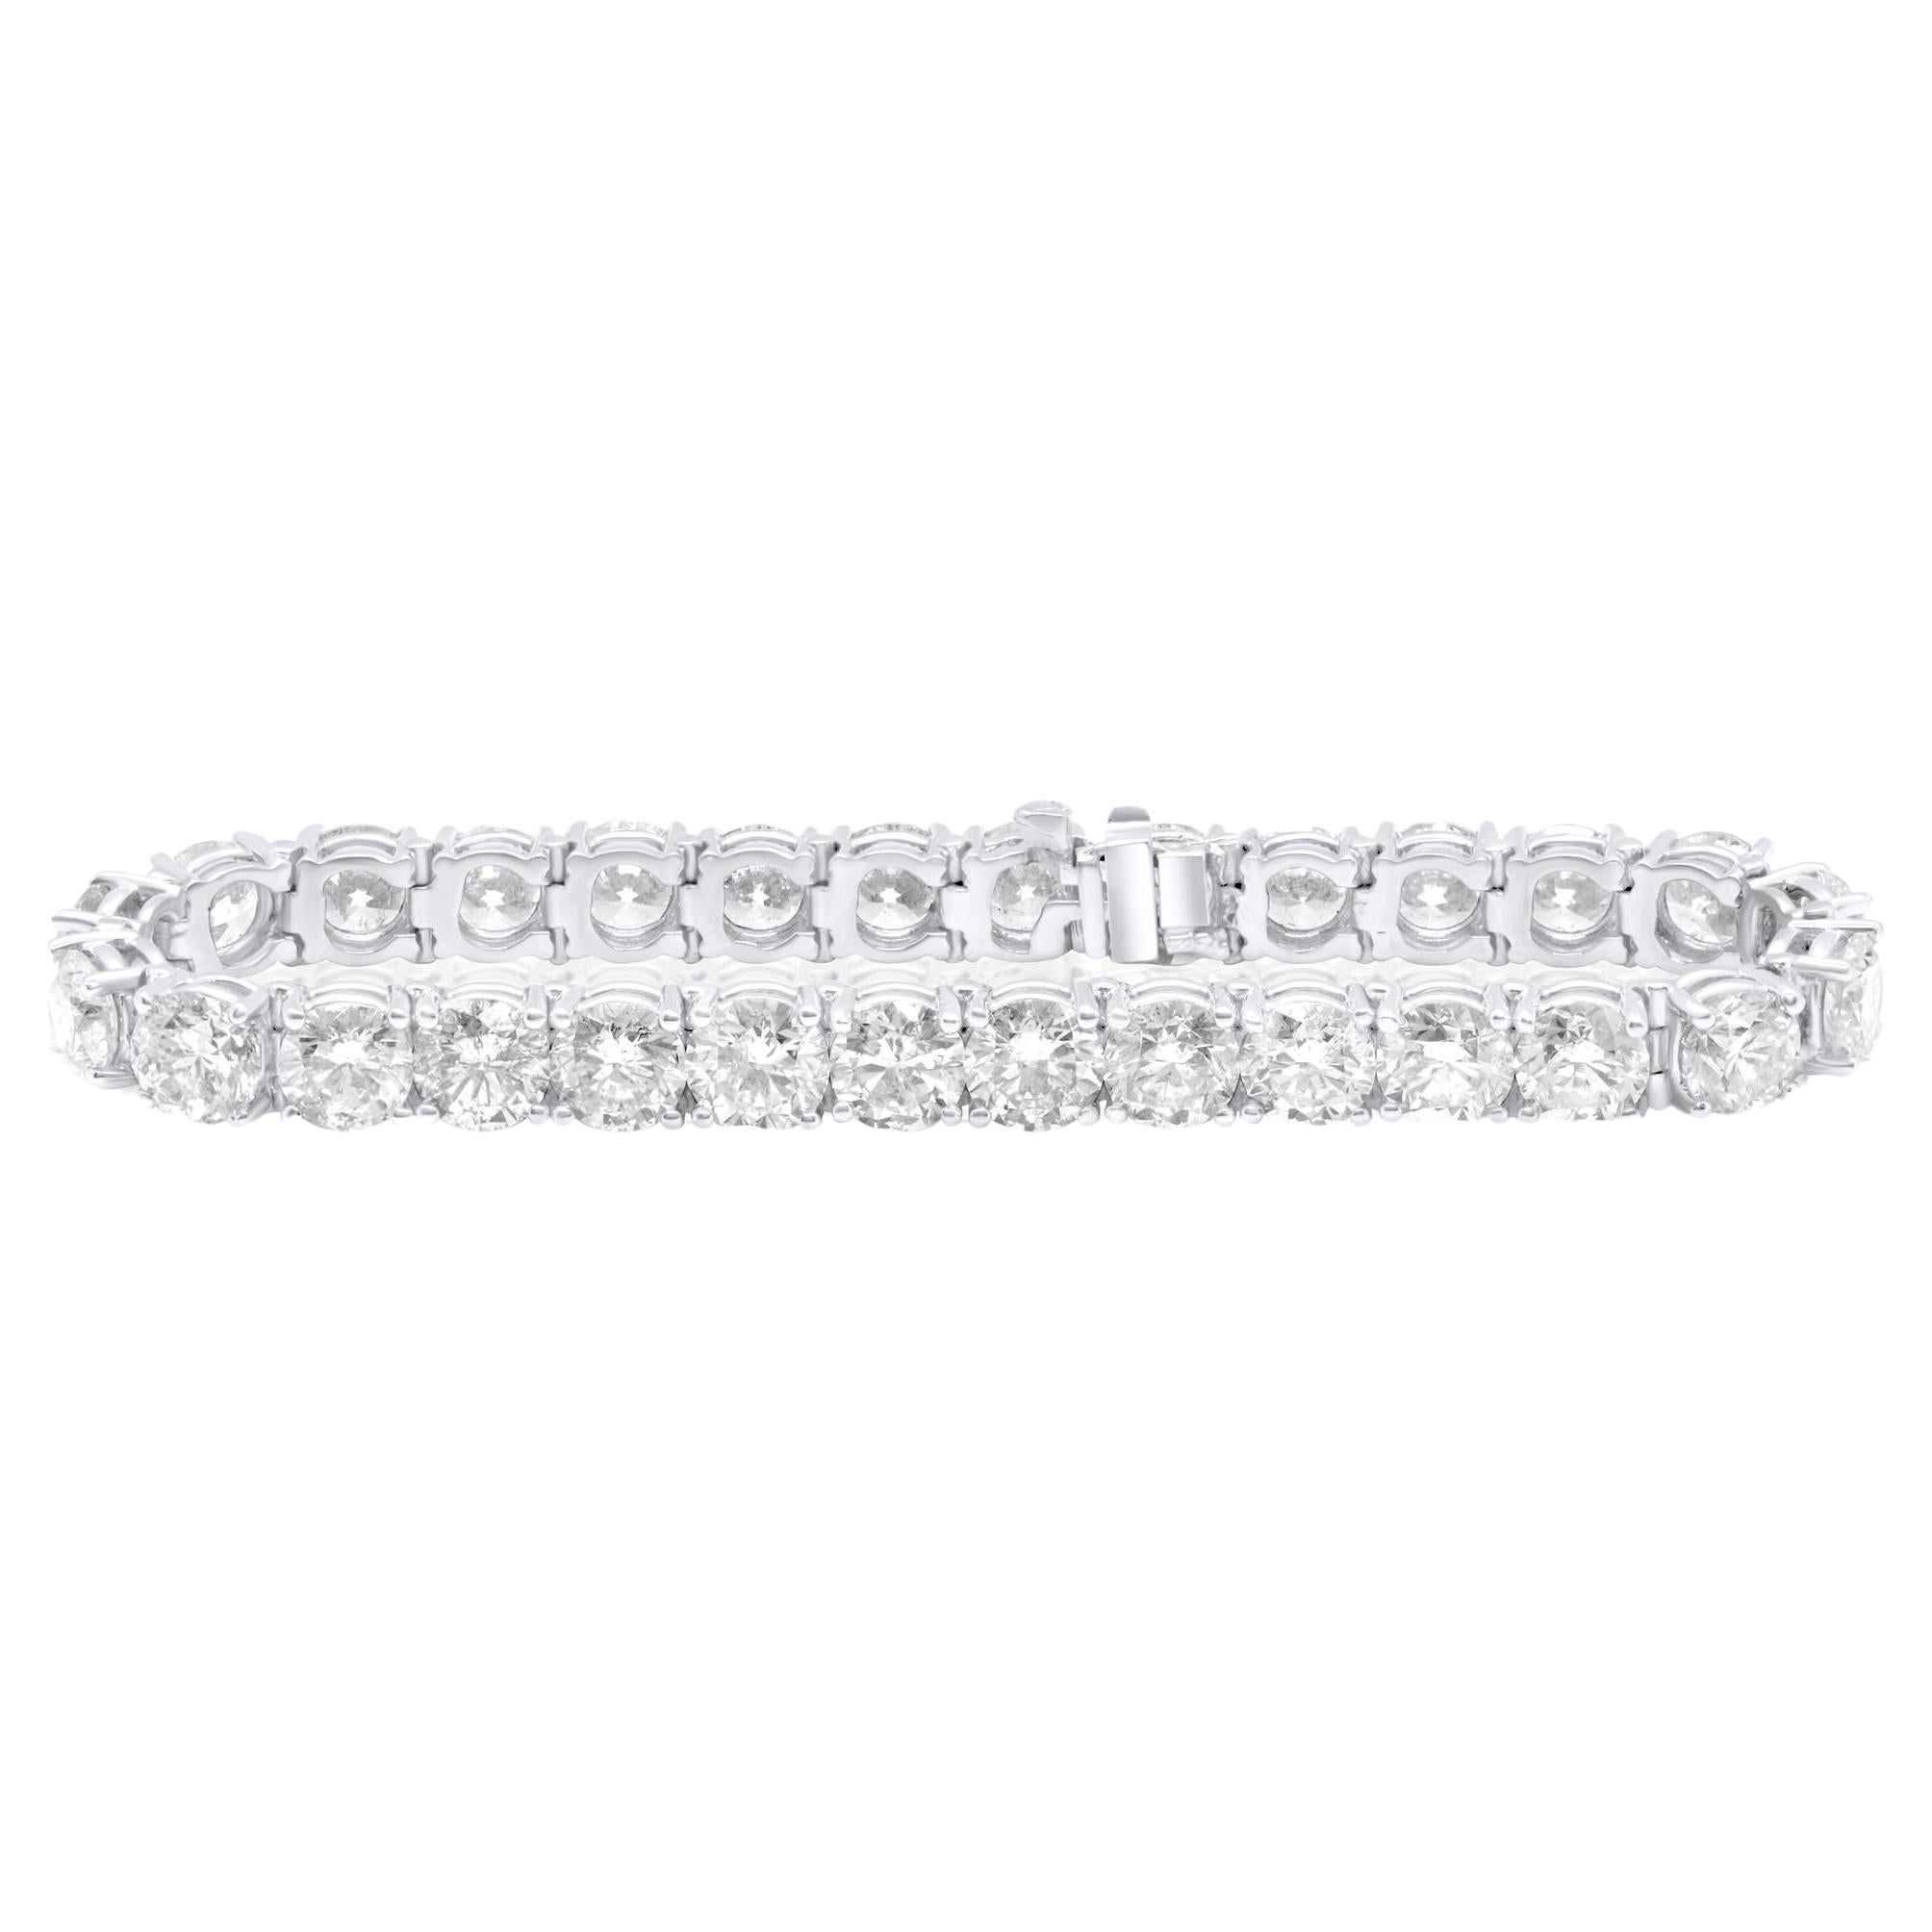 Diana M. 18 kt WG classic tennis Bracelet 14.65 cts diamonds 4 ptong 36 st